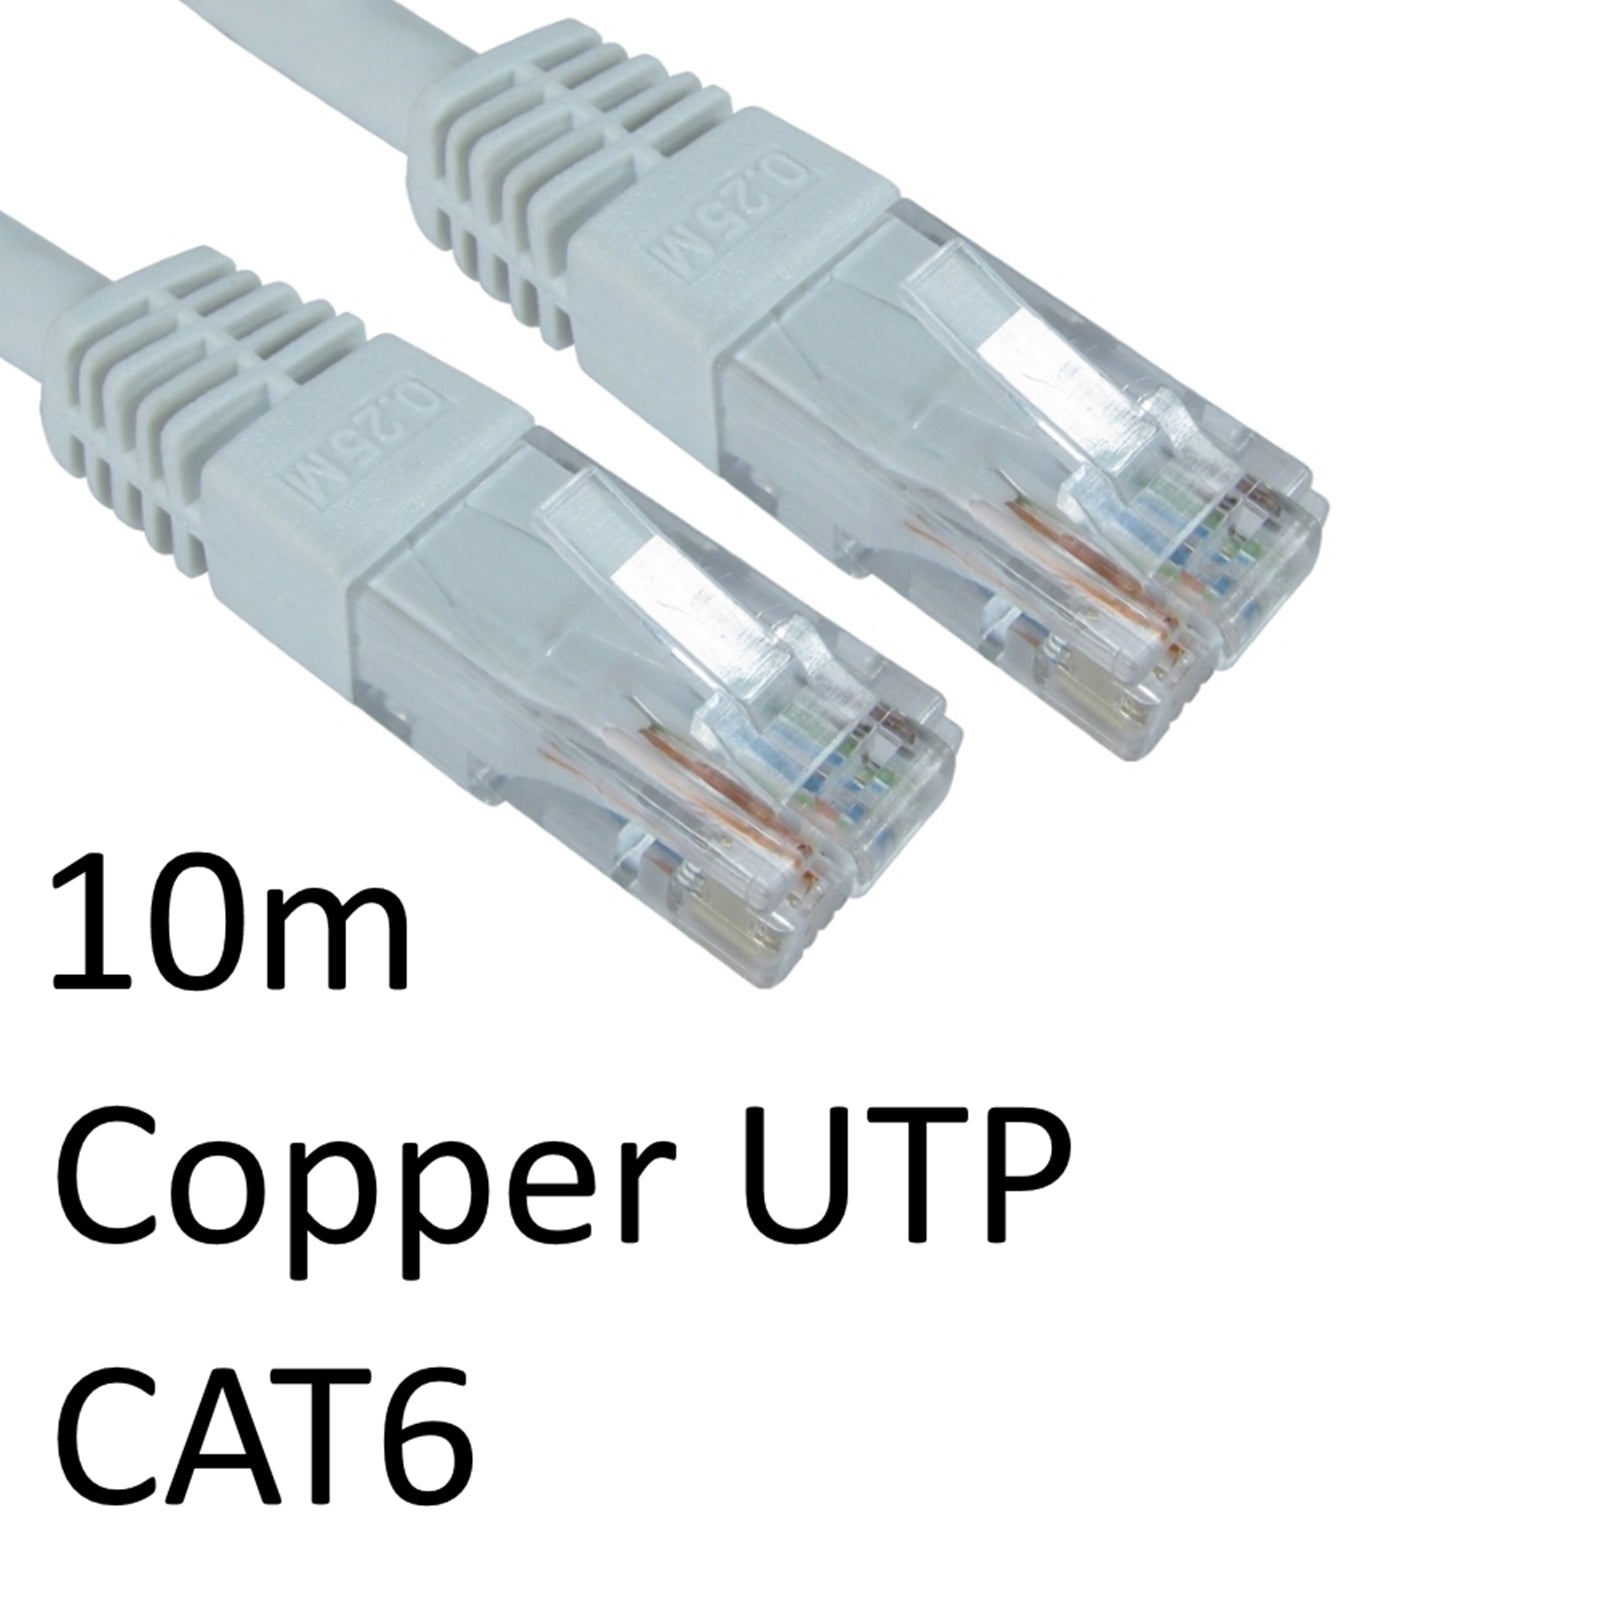 RJ45 (M) to RJ45 (M) CAT6 10m White Network Cable